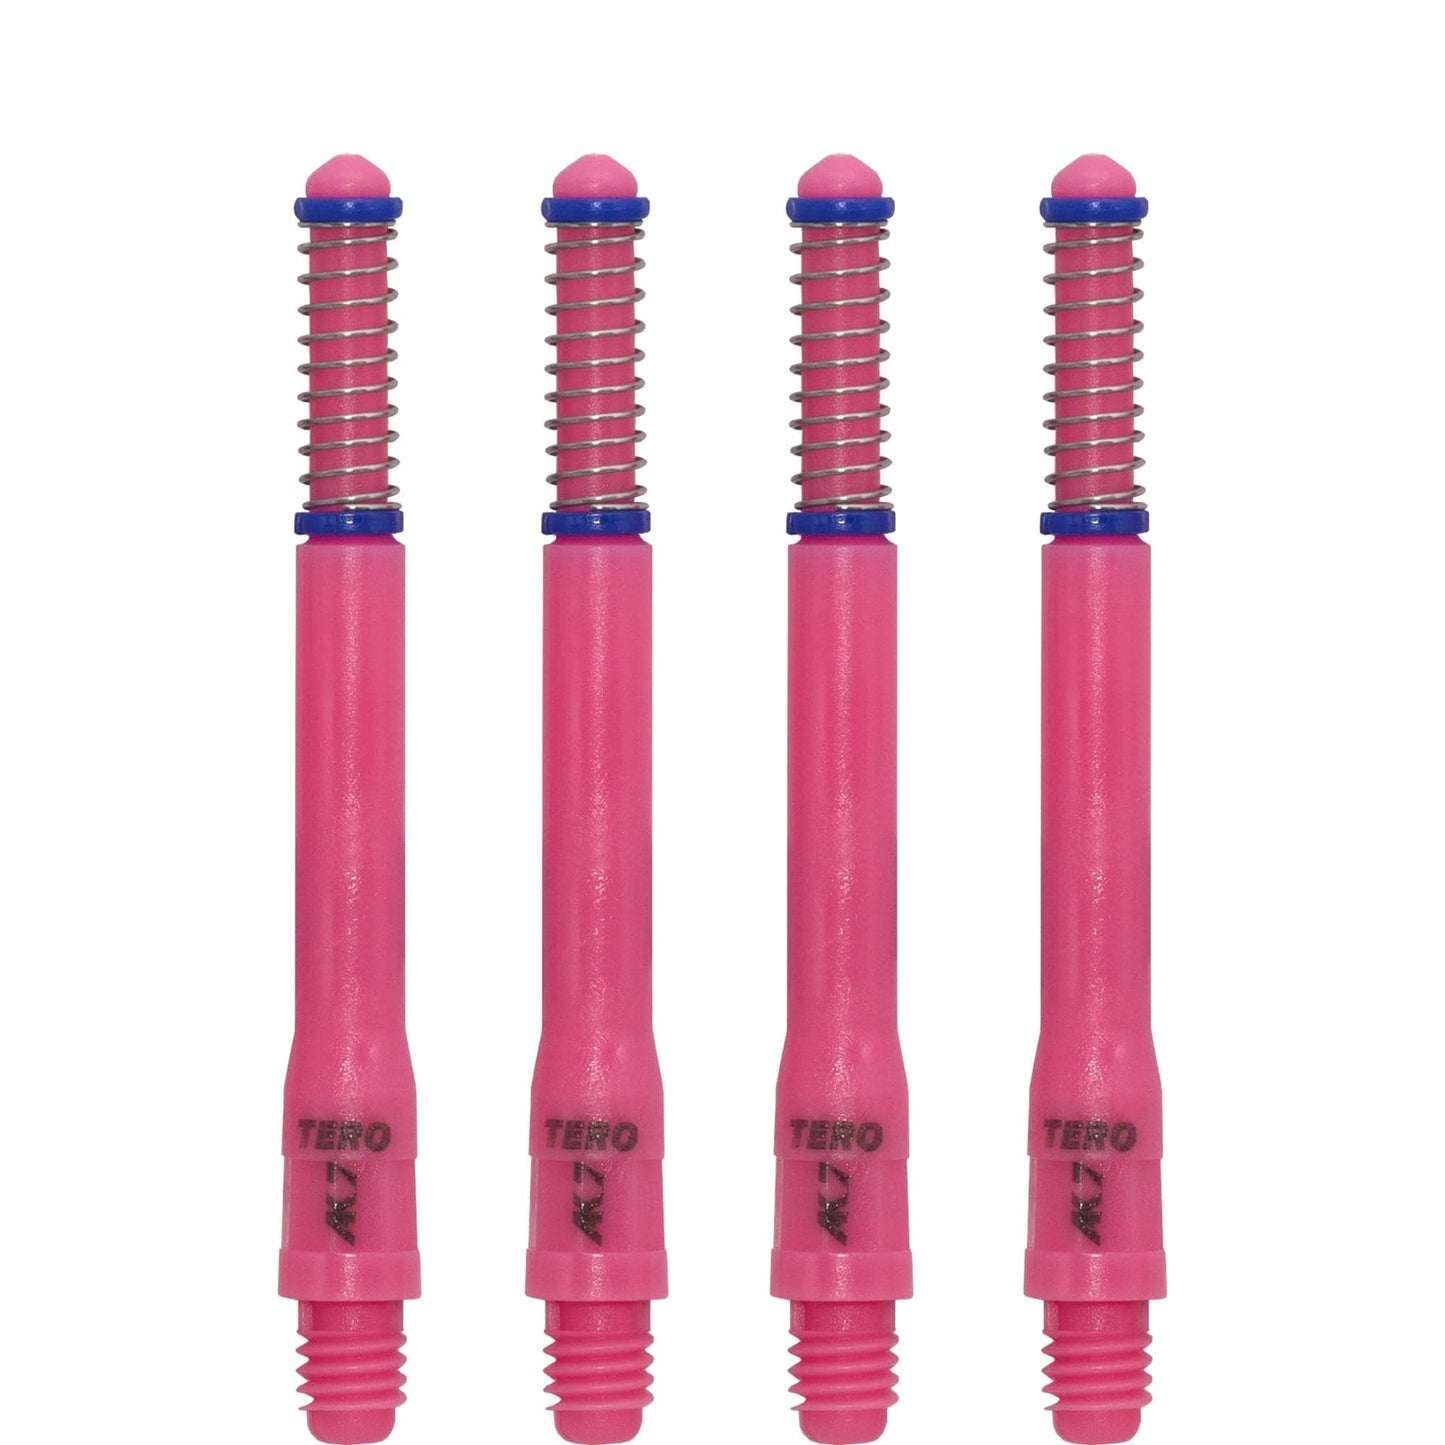 Cuesoul - Dart Shafts - Tero Flight System - AK7 - Standard - Set of 4 - Pink Cuesoul 47mm